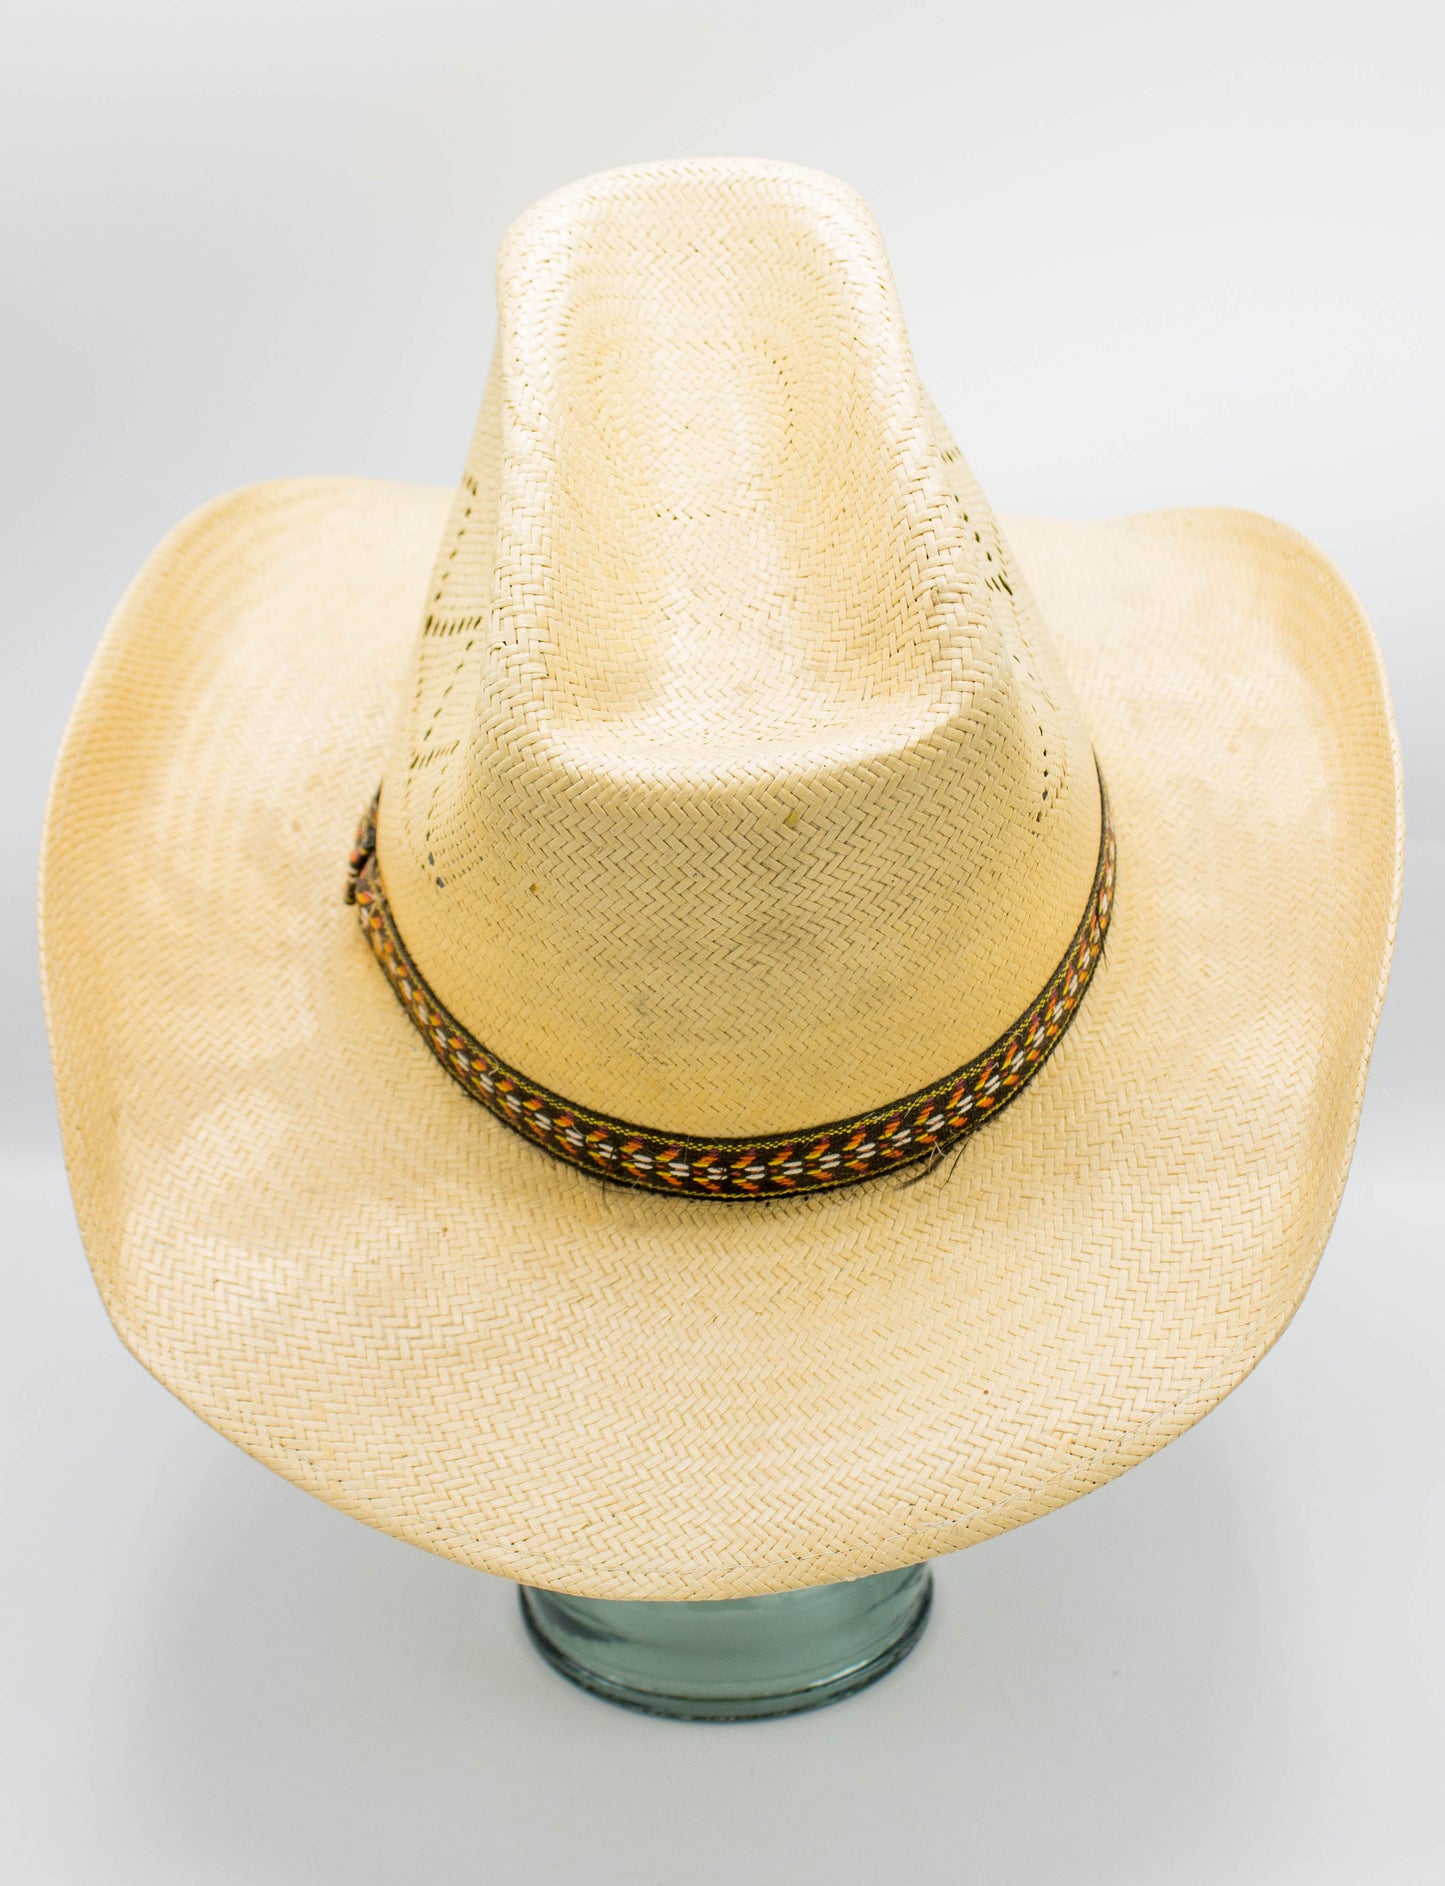 Vintage Stomper 70s Tall Straw Cowboy Hat Size 6 7/8